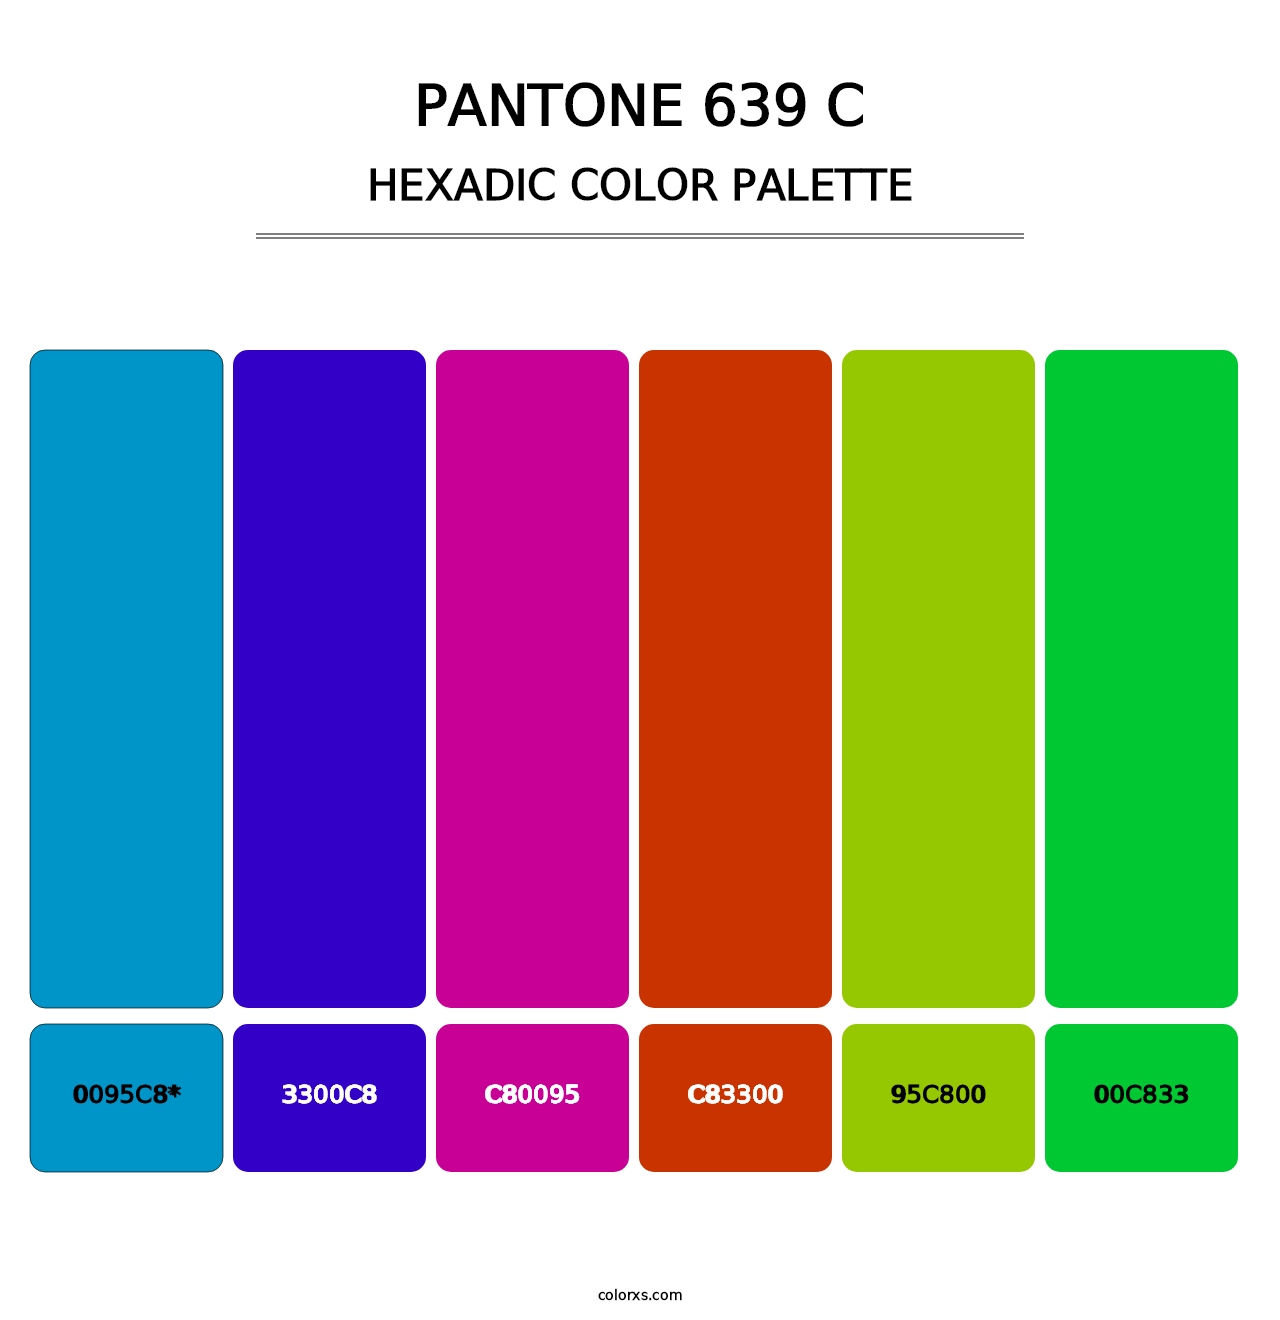 PANTONE 639 C - Hexadic Color Palette